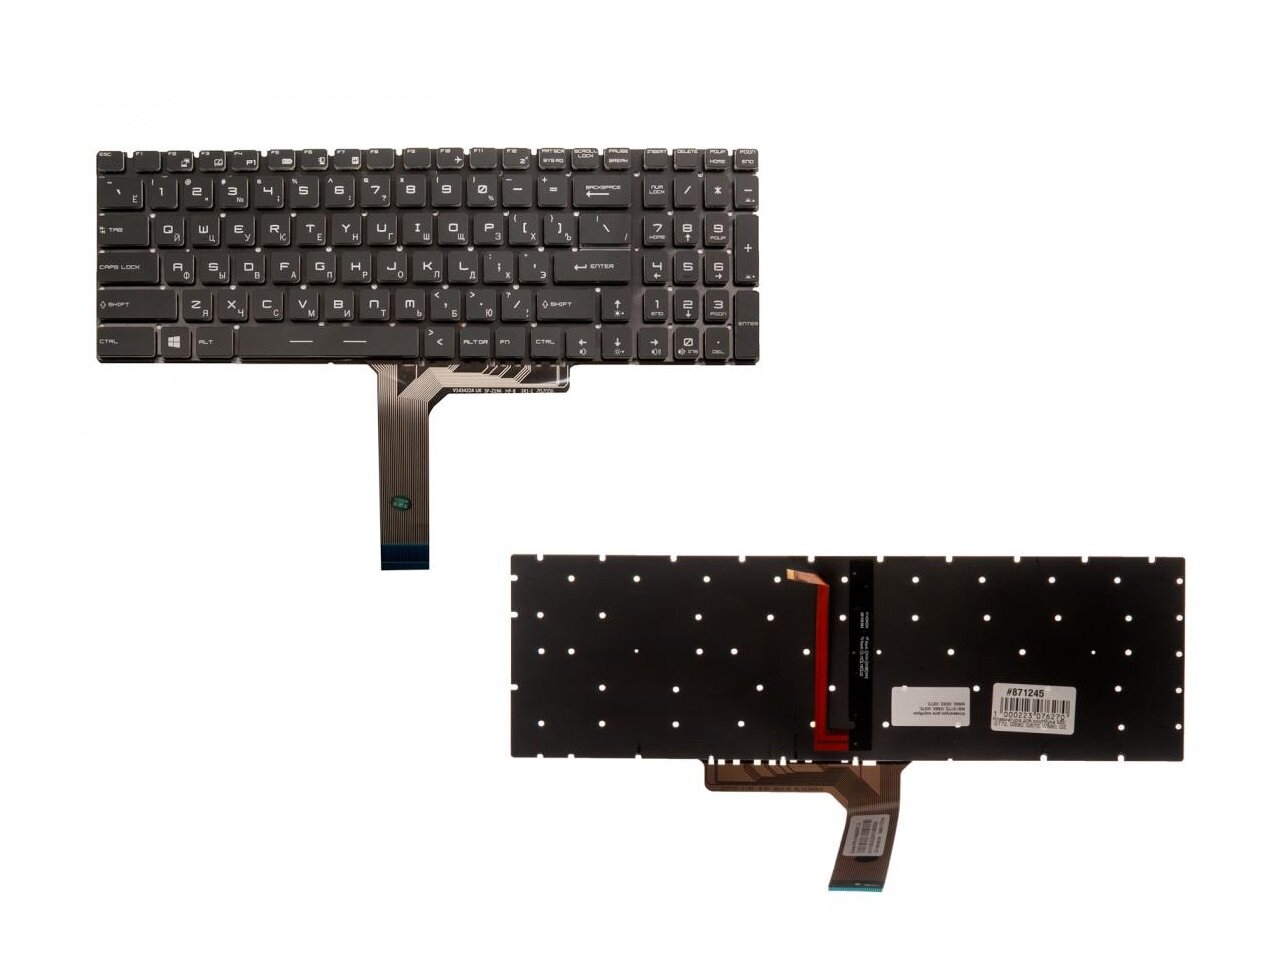 Keyboard / Клавиатура для ноутбука MSI GT72, GS60, GS70, WS60, GE62, GE72, цвет черная, с подсветкой